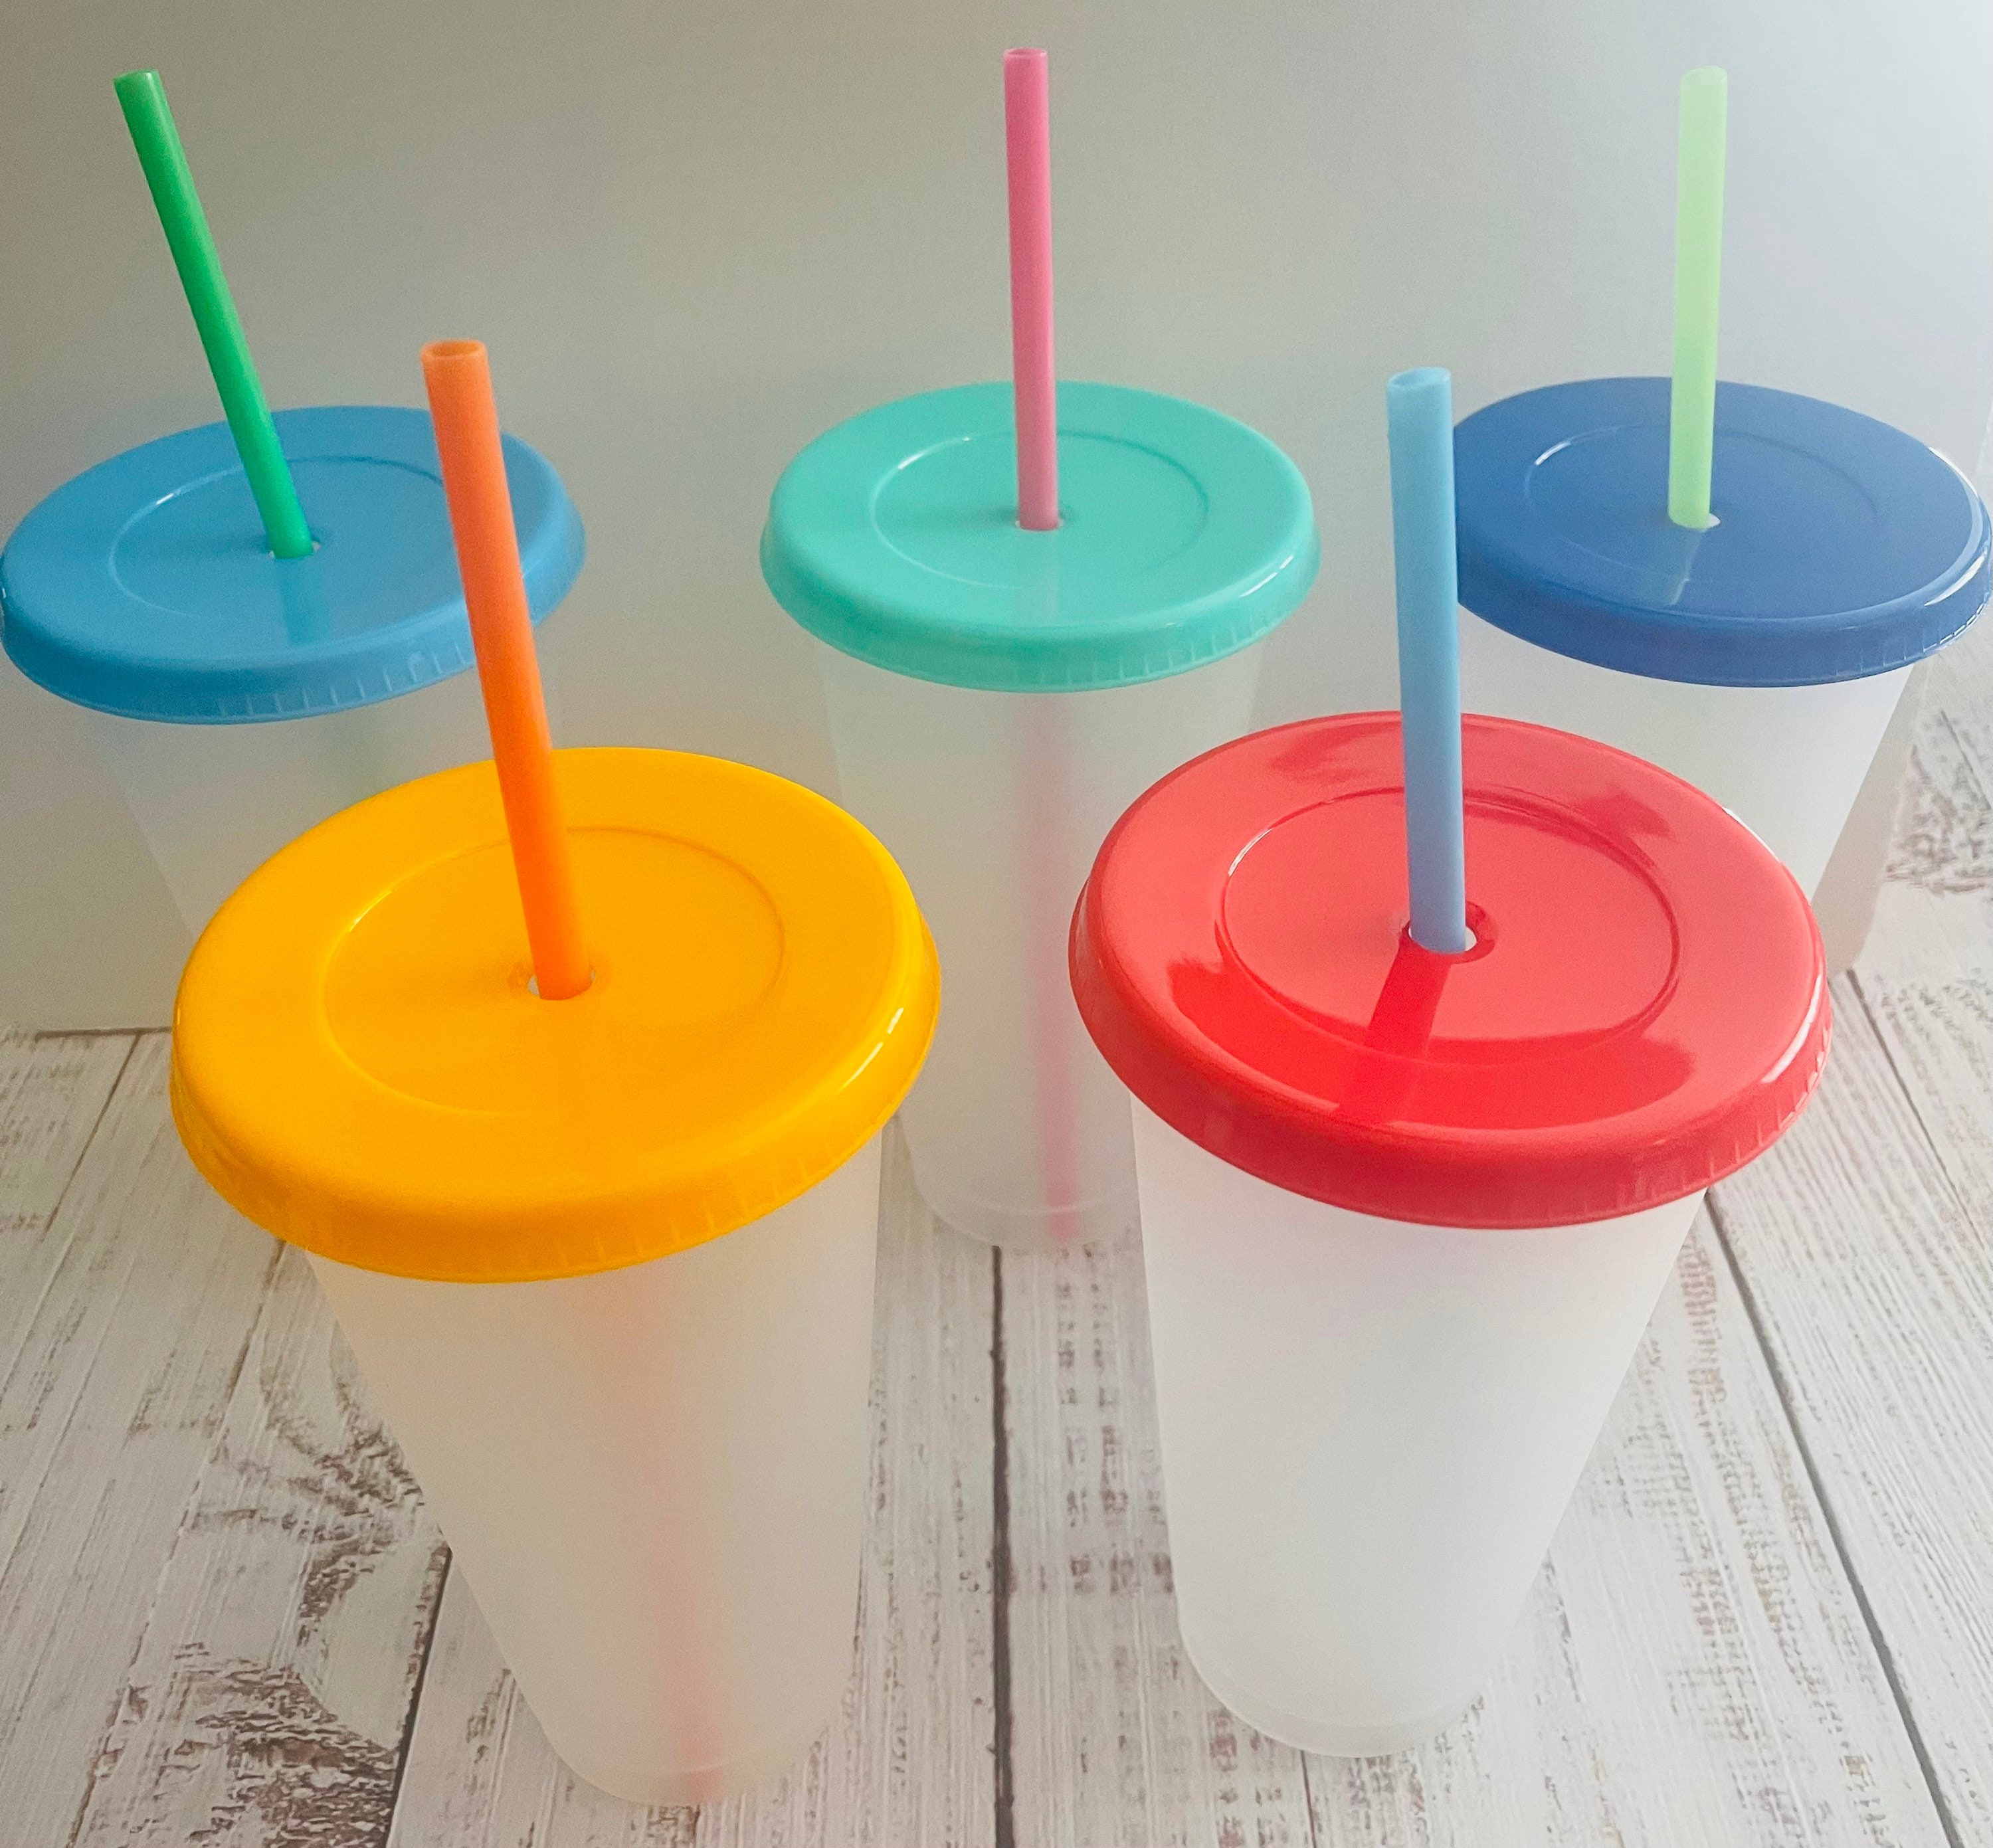 Full Color Clear Plastic Cups - Kick Print